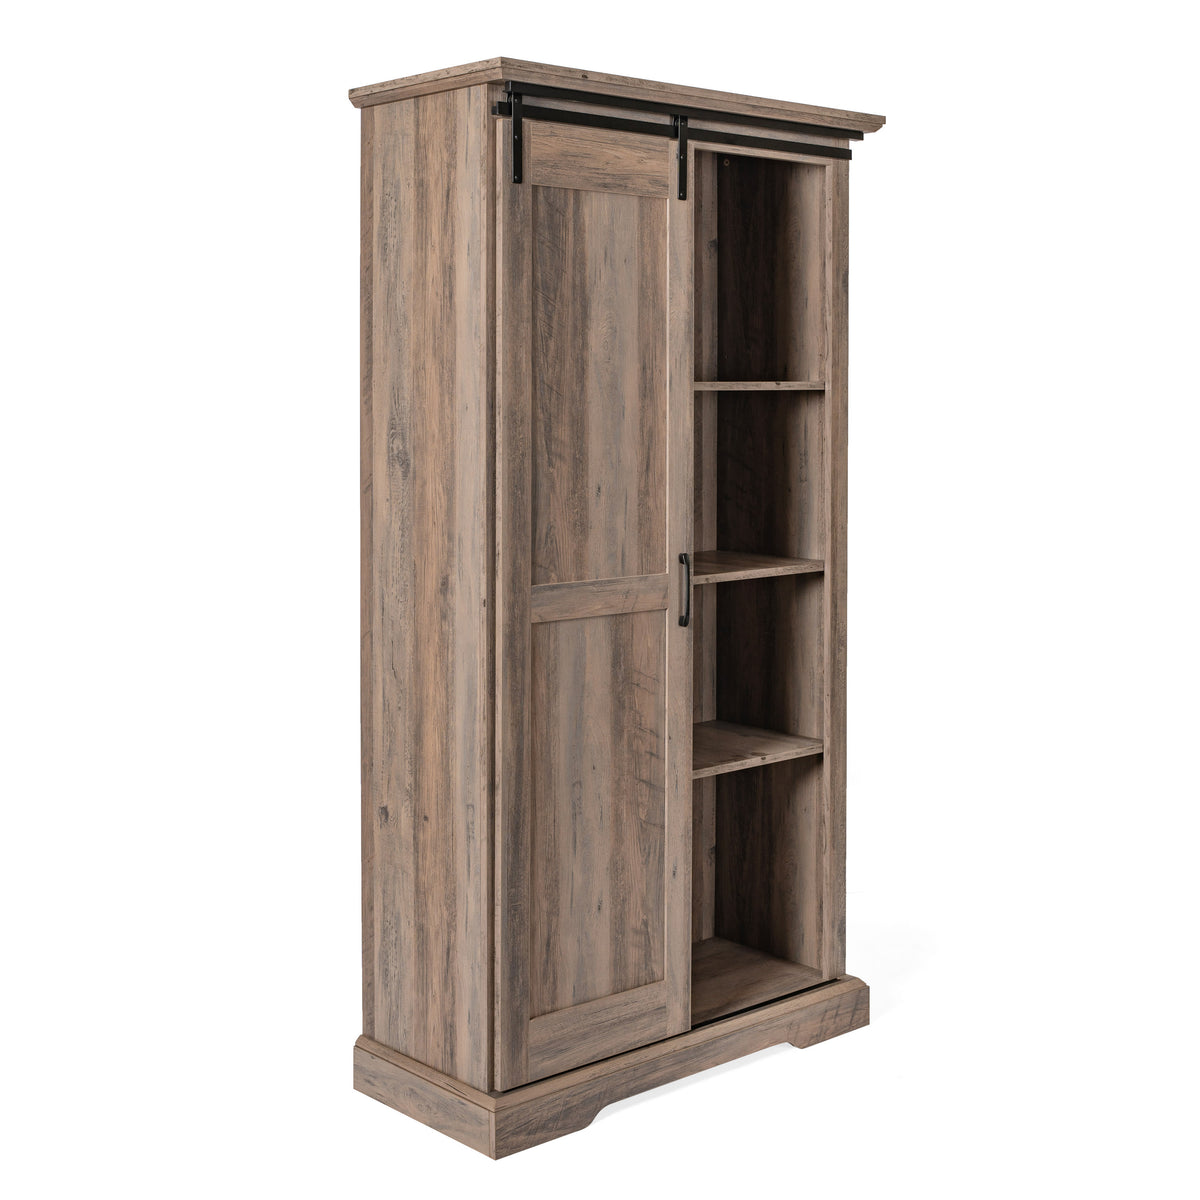 Graywash |#| Farmhouse Storage Cabinet with Adjustable Shelves and Sliding Barn Door-Graywash